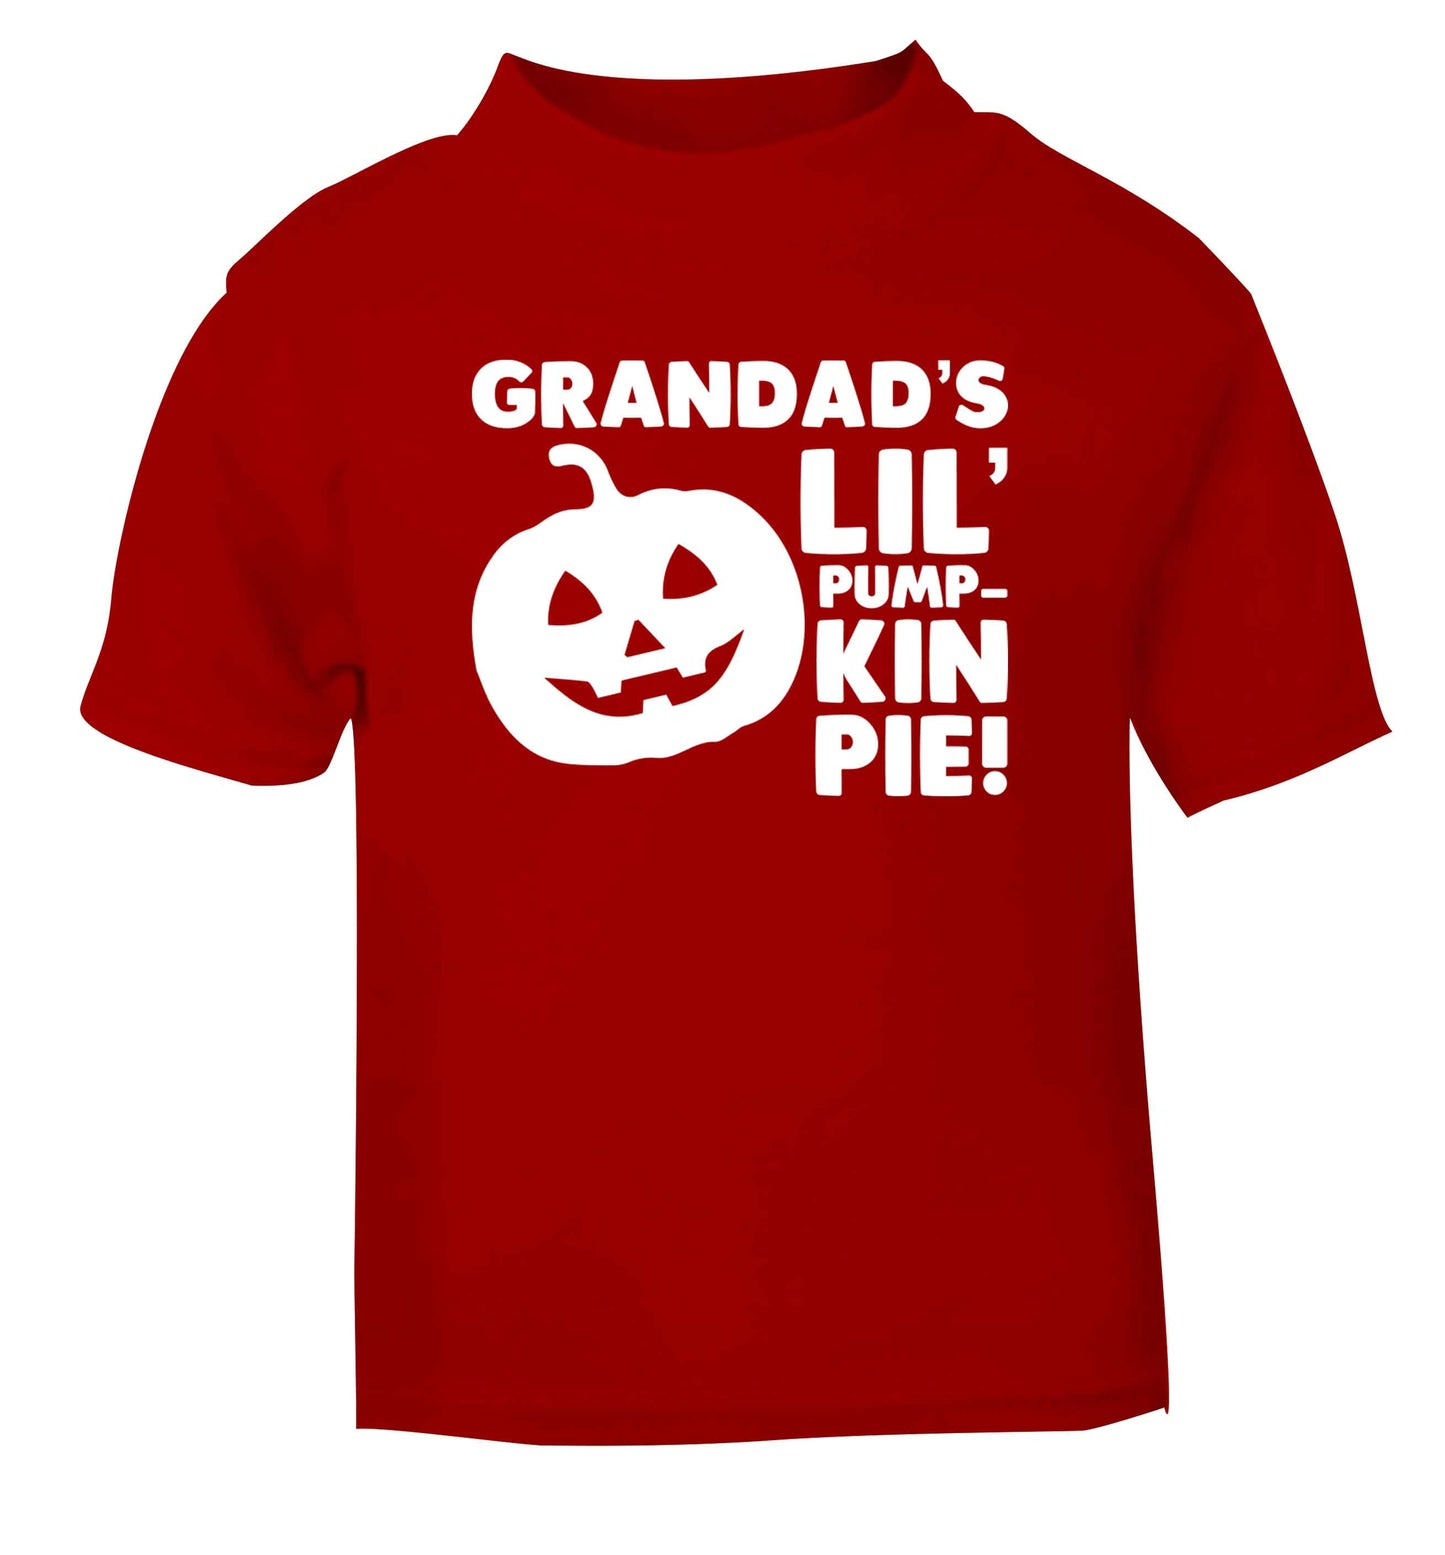 Grandad's lil' pumpkin pie red baby toddler Tshirt 2 Years